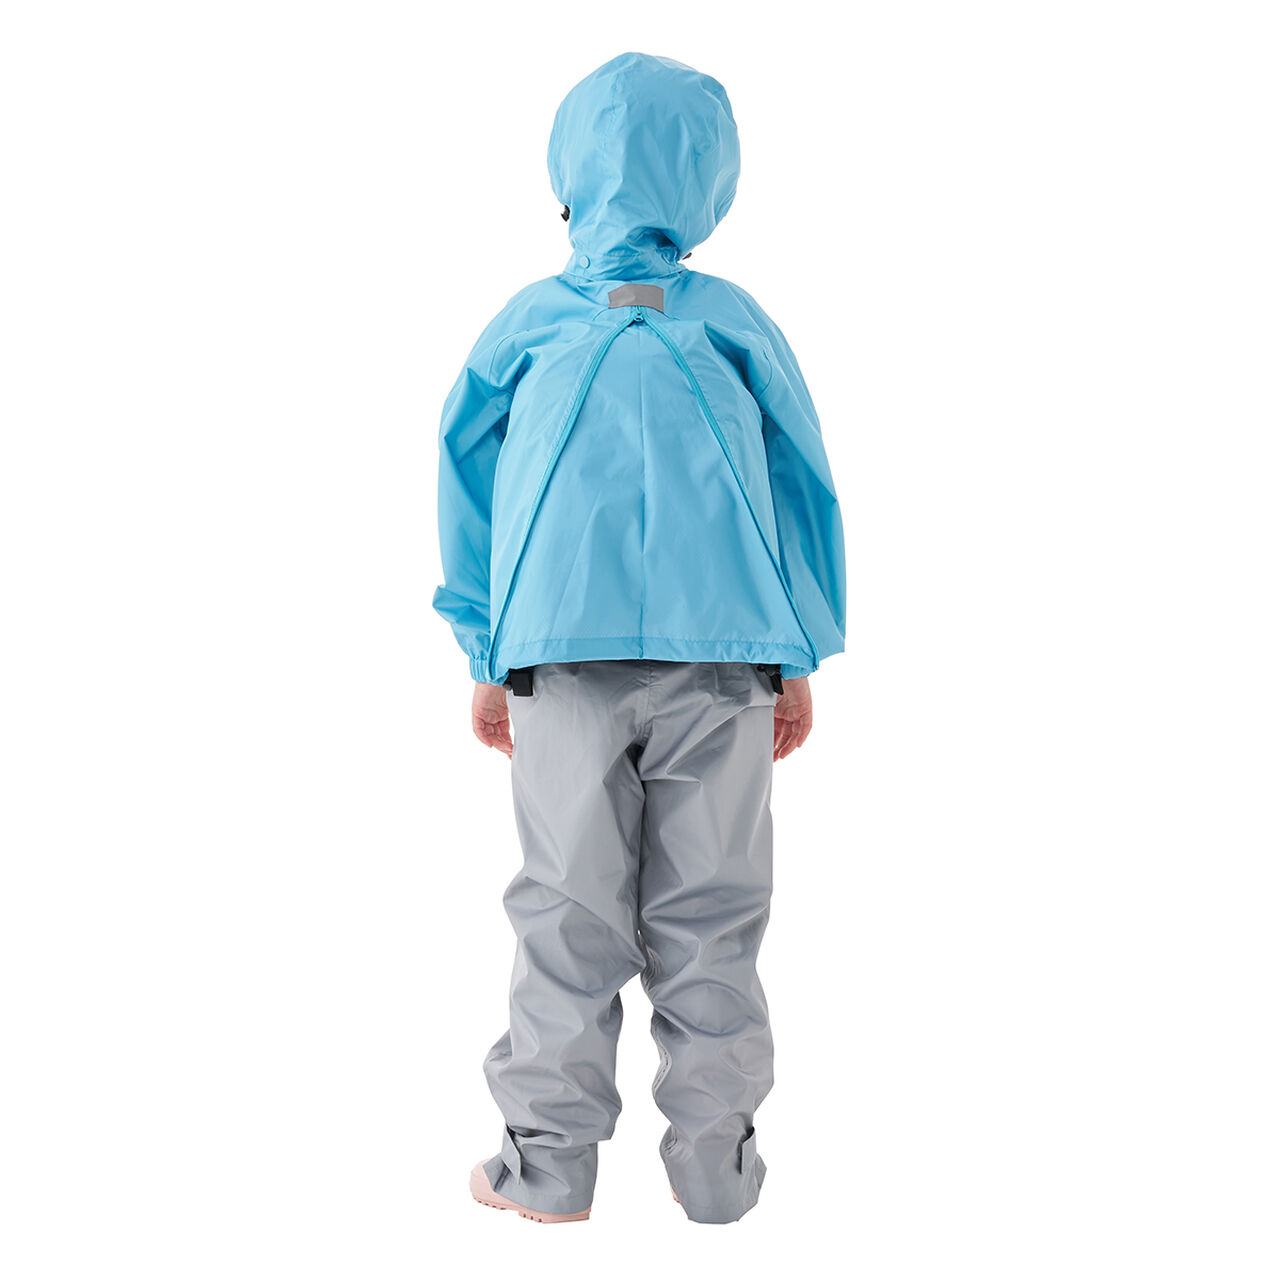 LOGOS Kids' Rain Suits,Blue, large image number 10